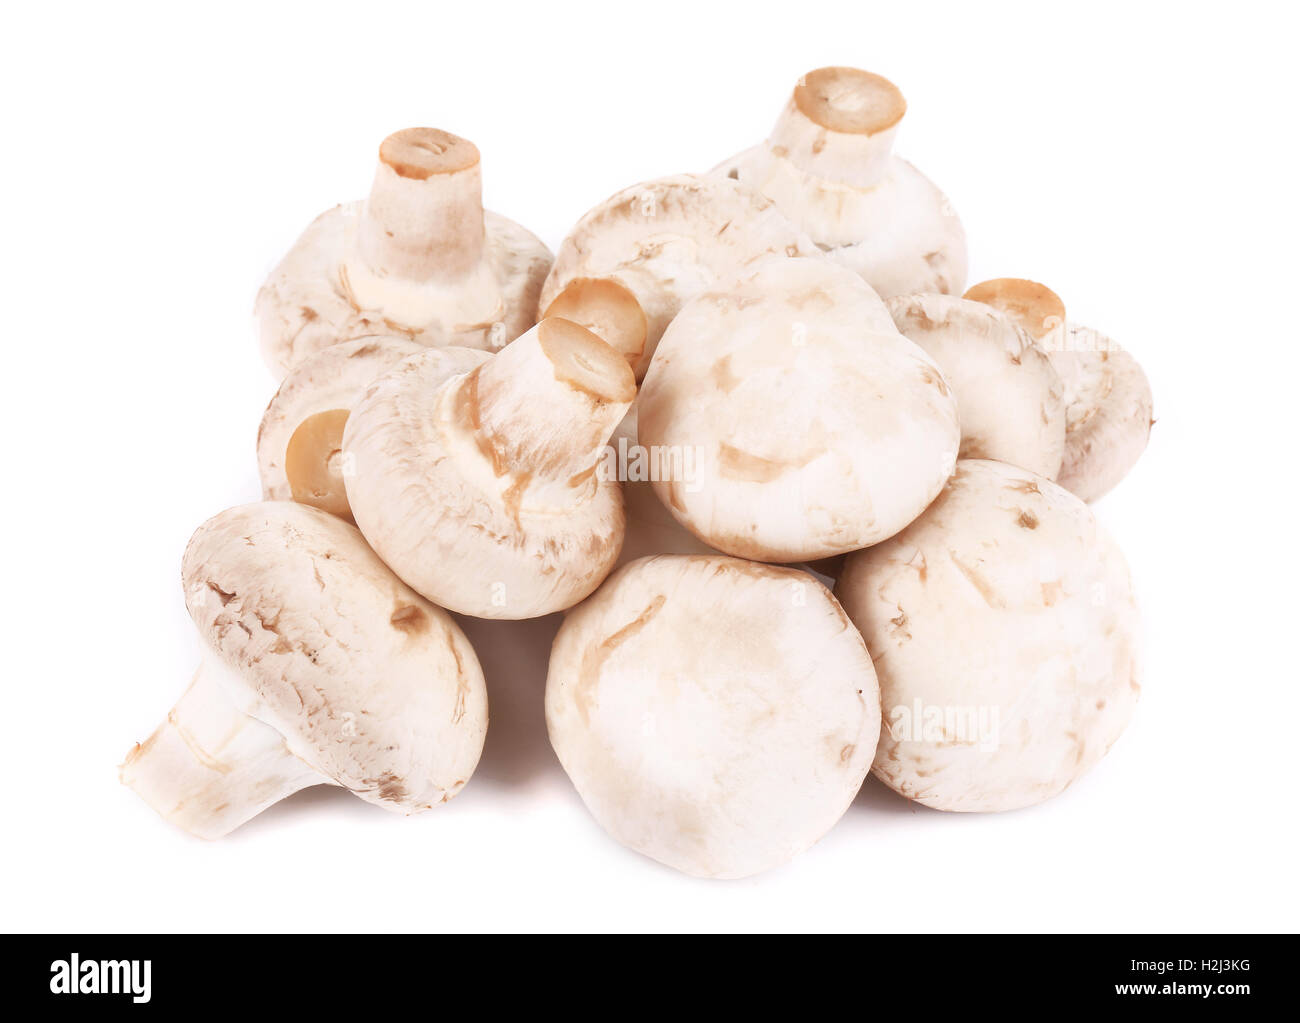 Bunch of white mushrooms close up Stock Photo